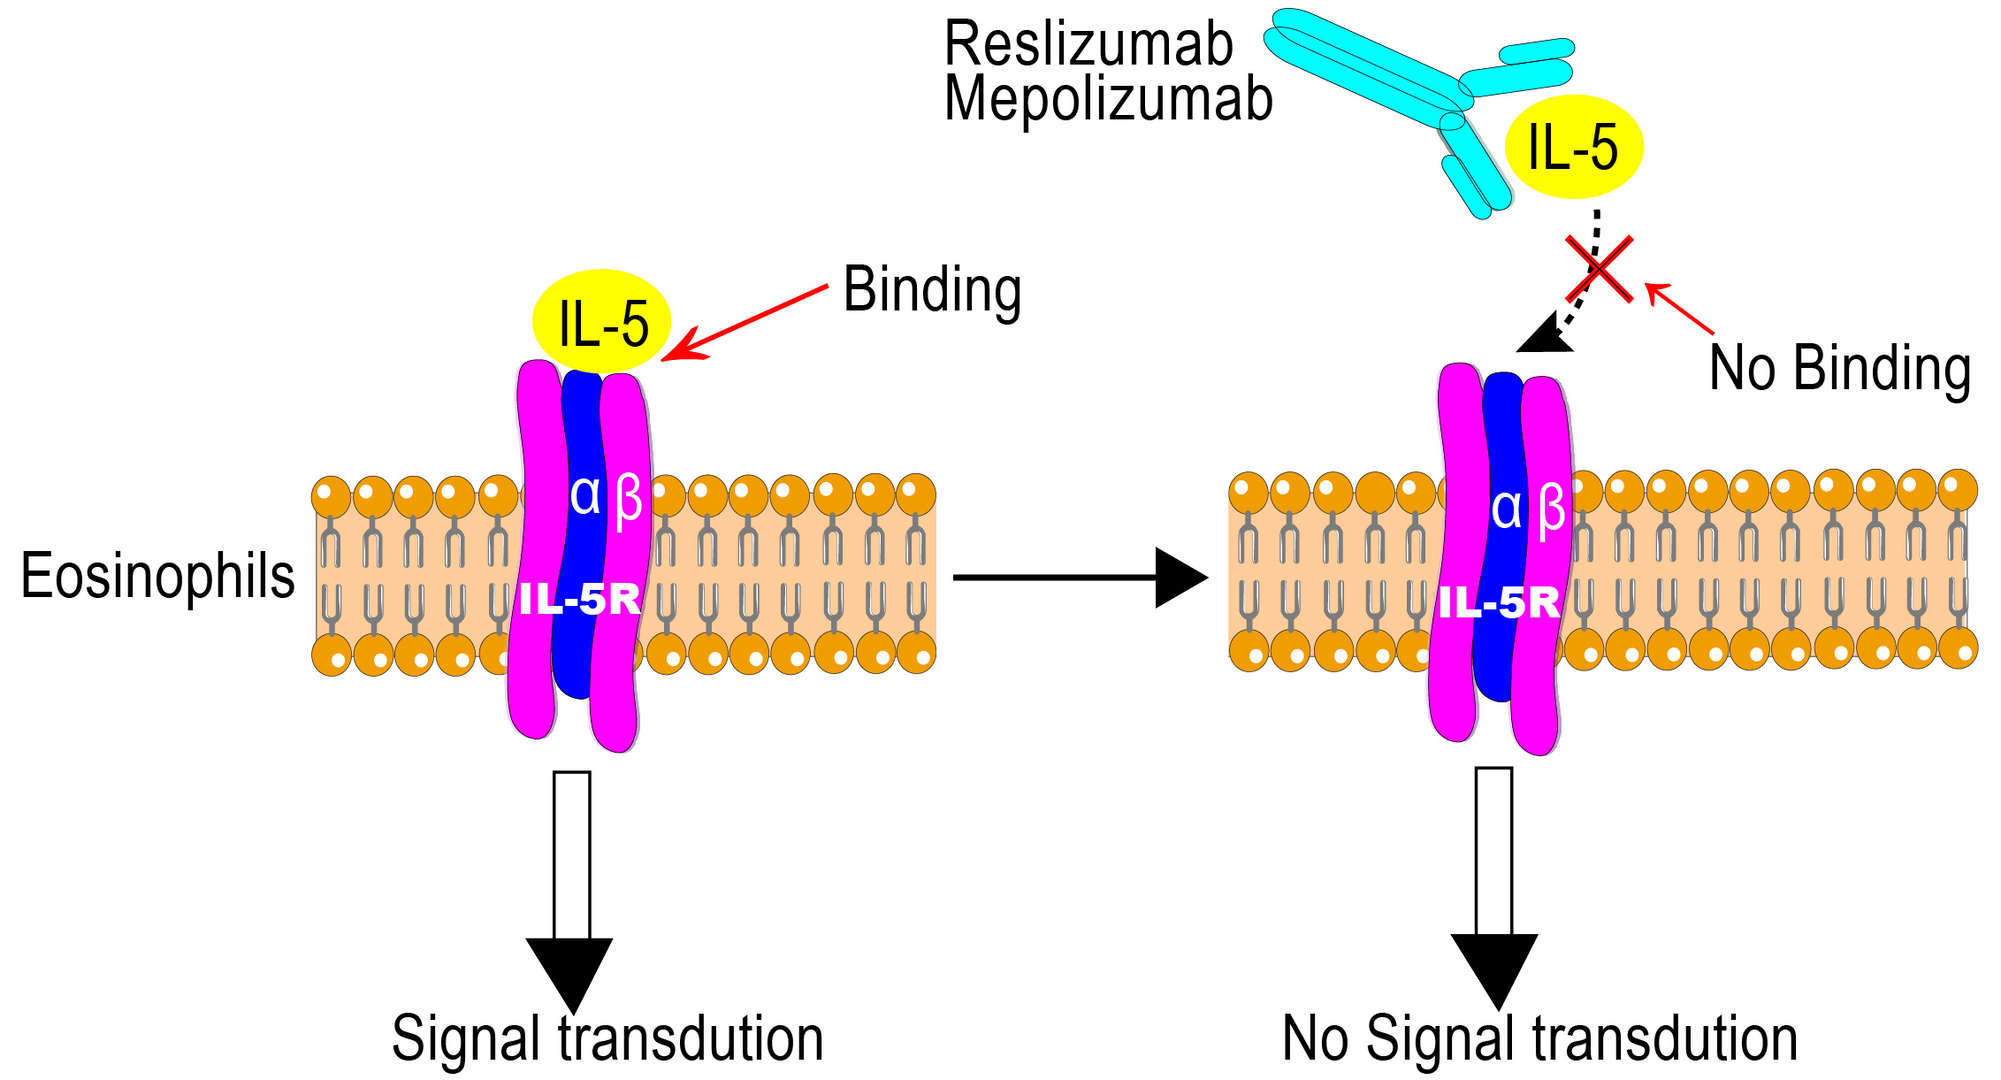 Mechanism of Action of Reslizumab